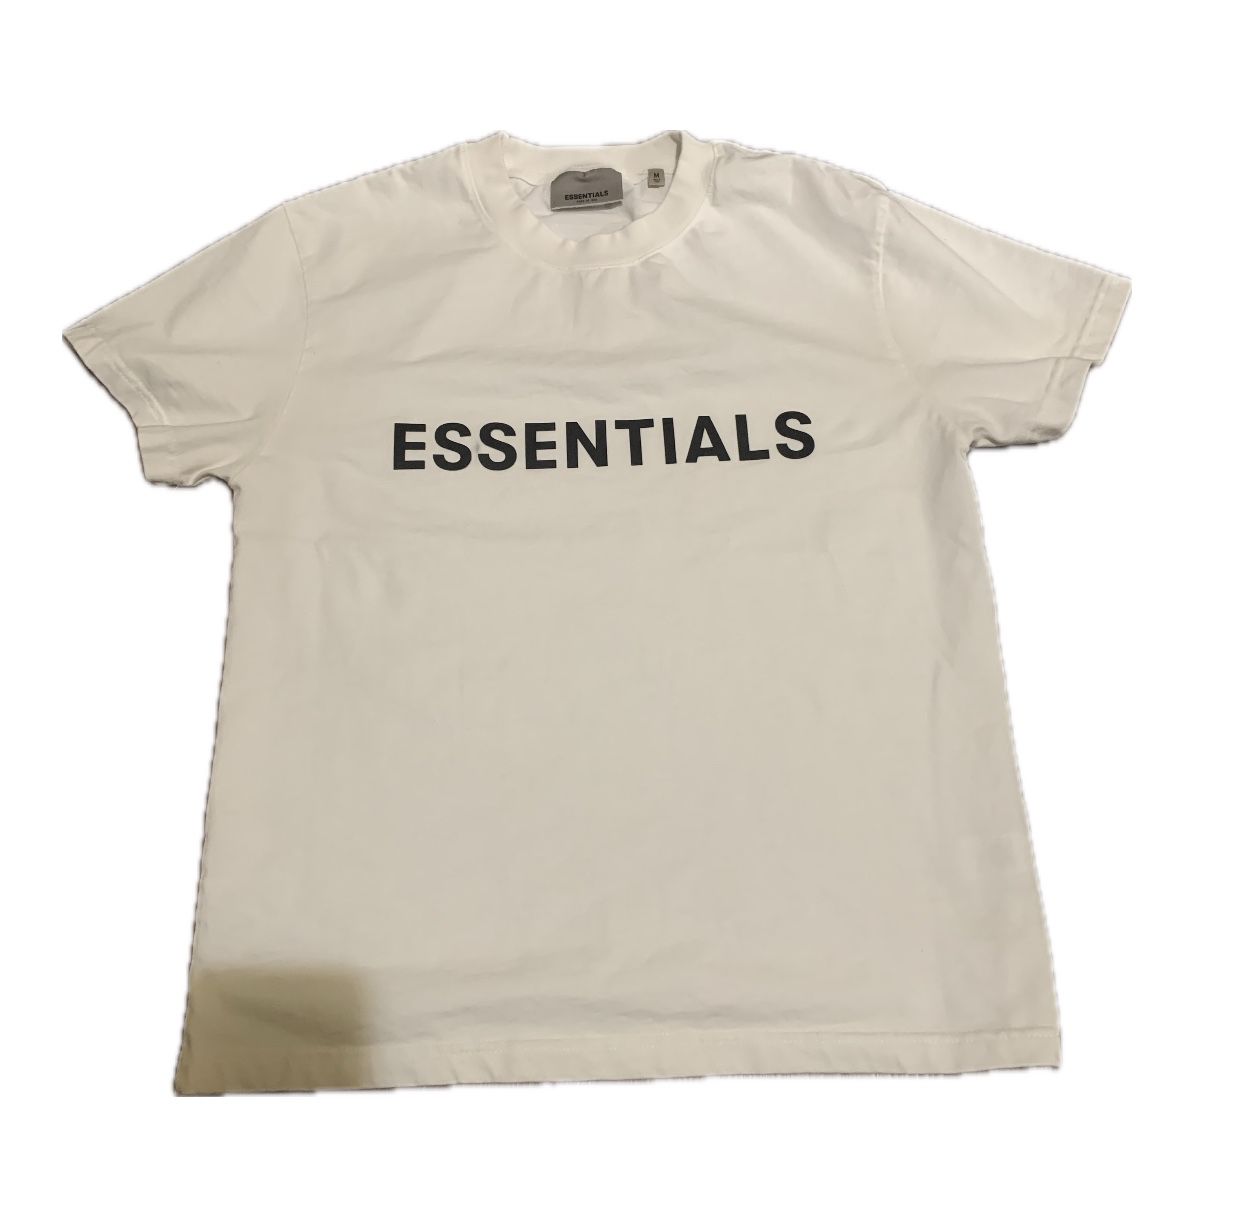 White Essentials Fear of God T-shirt 